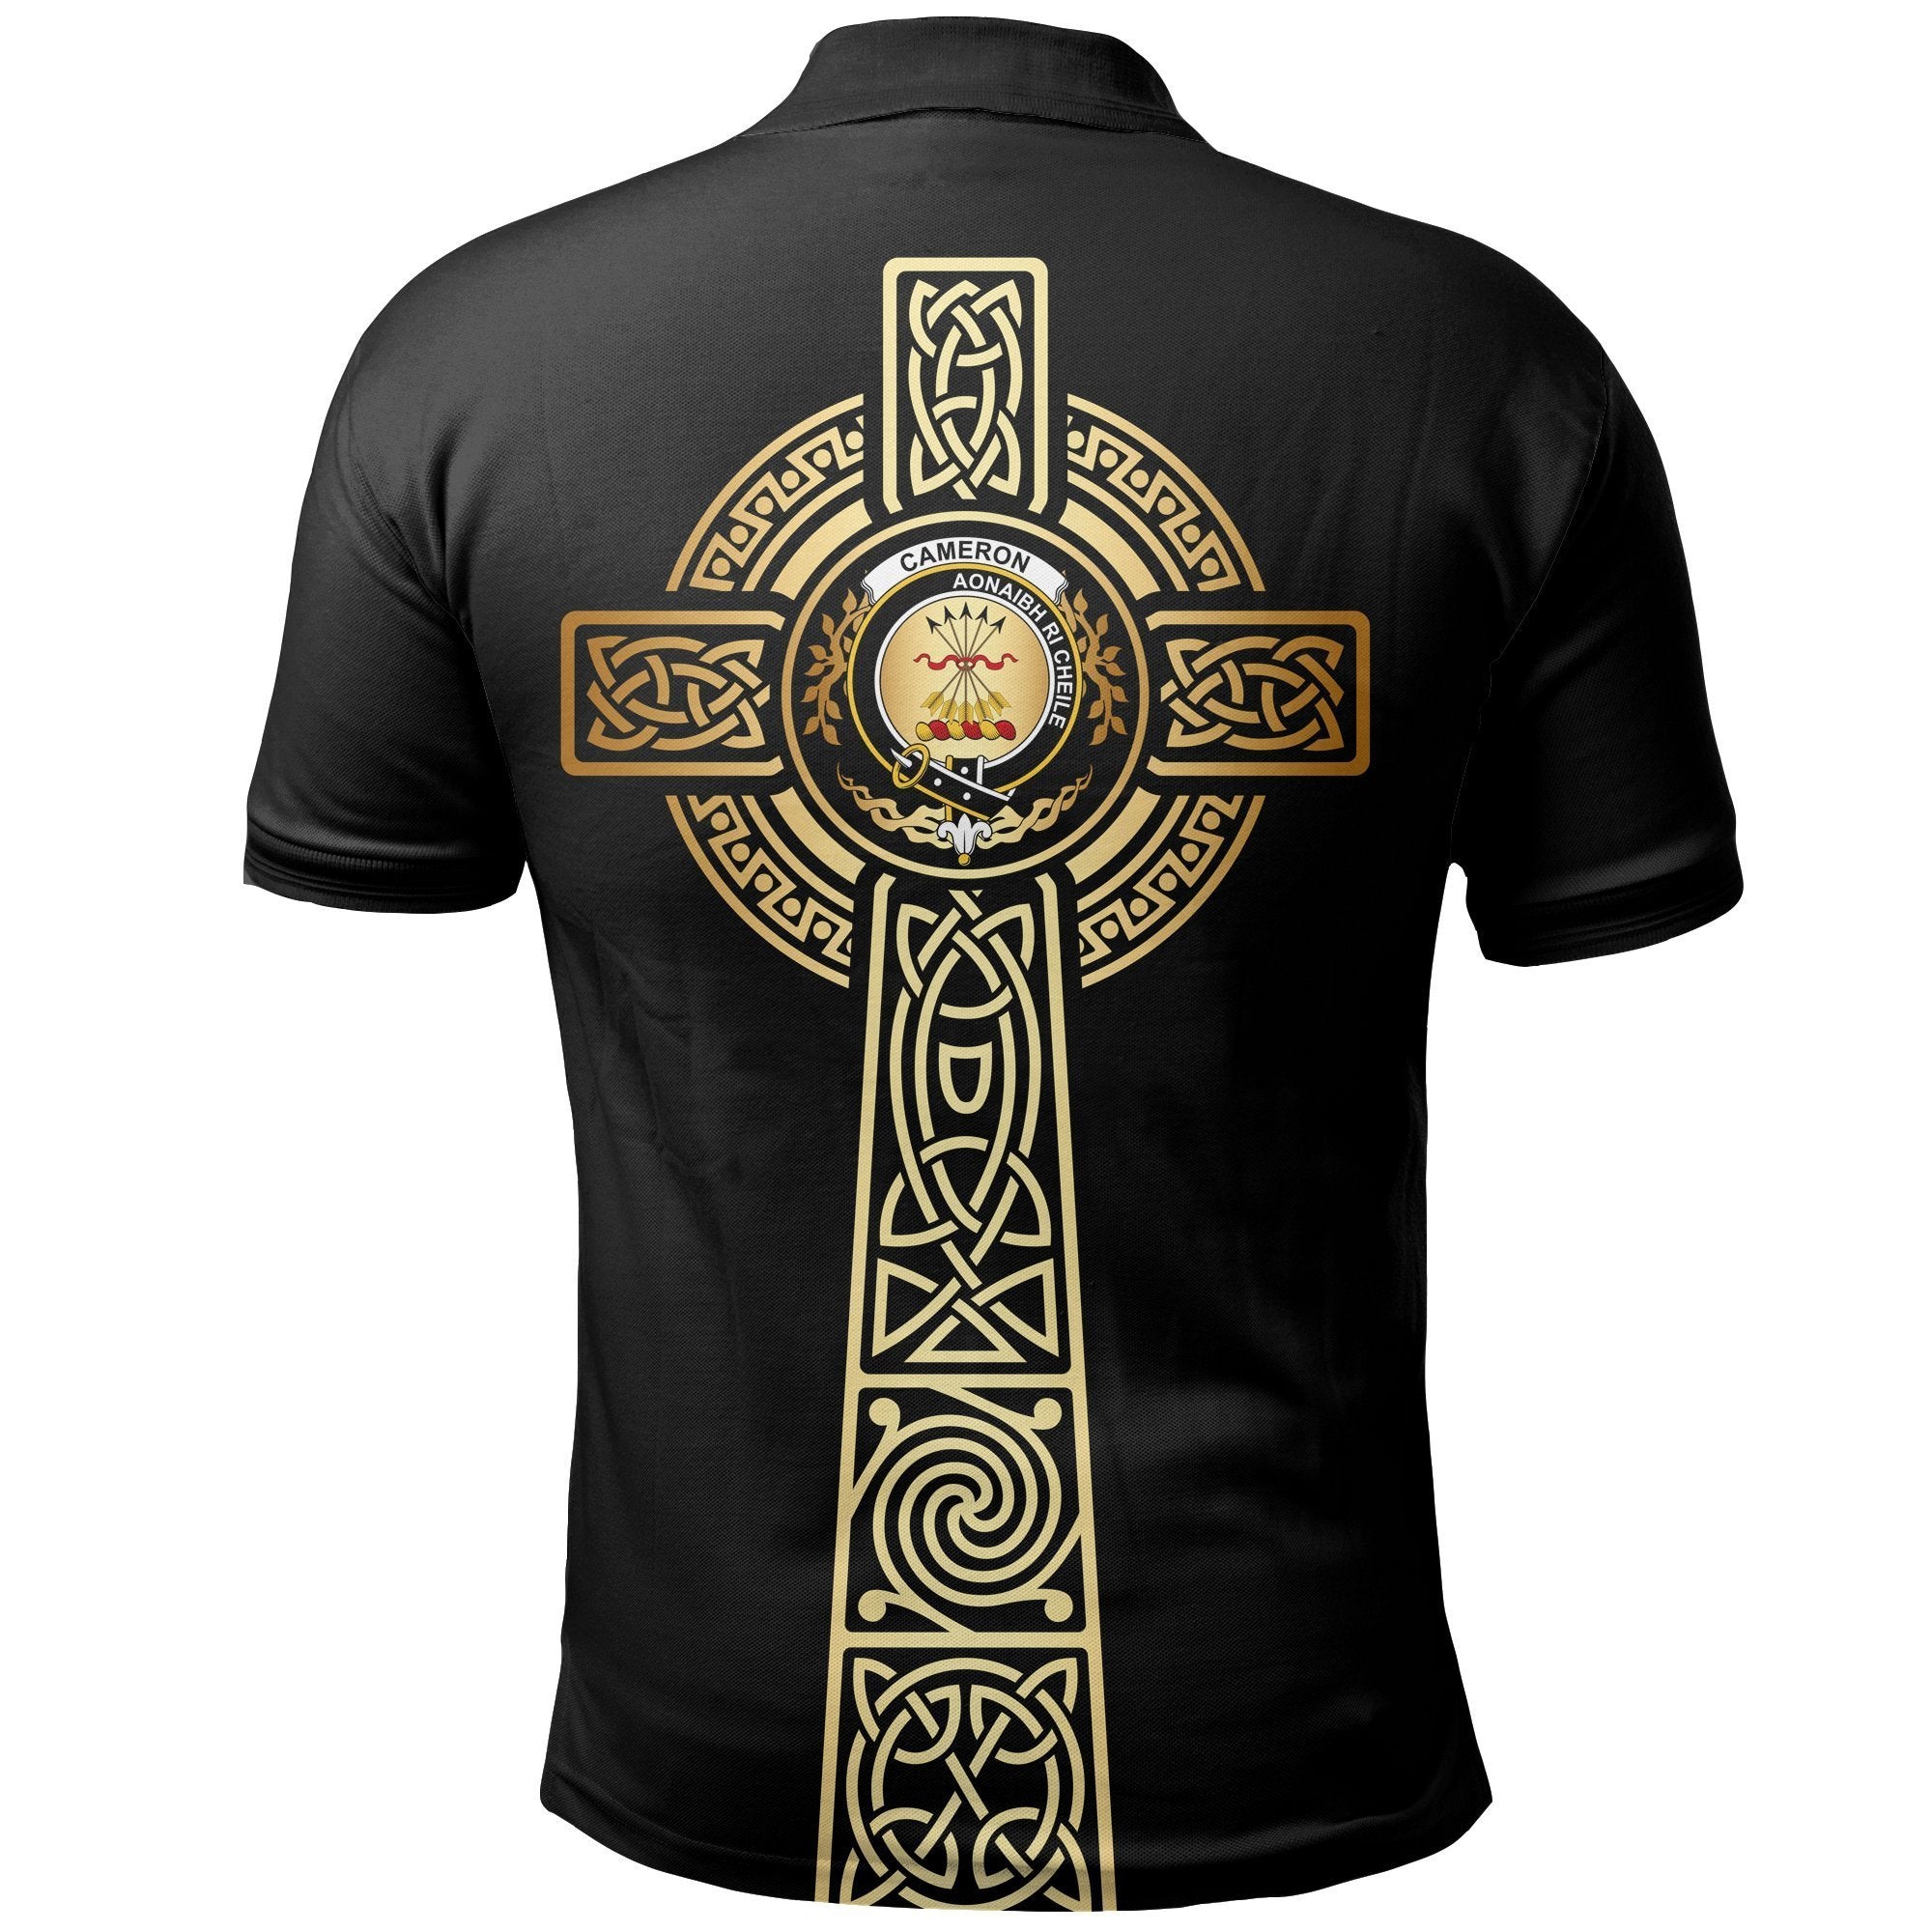 Cameron Clan Unisex Polo Shirt - Celtic Tree Of Life